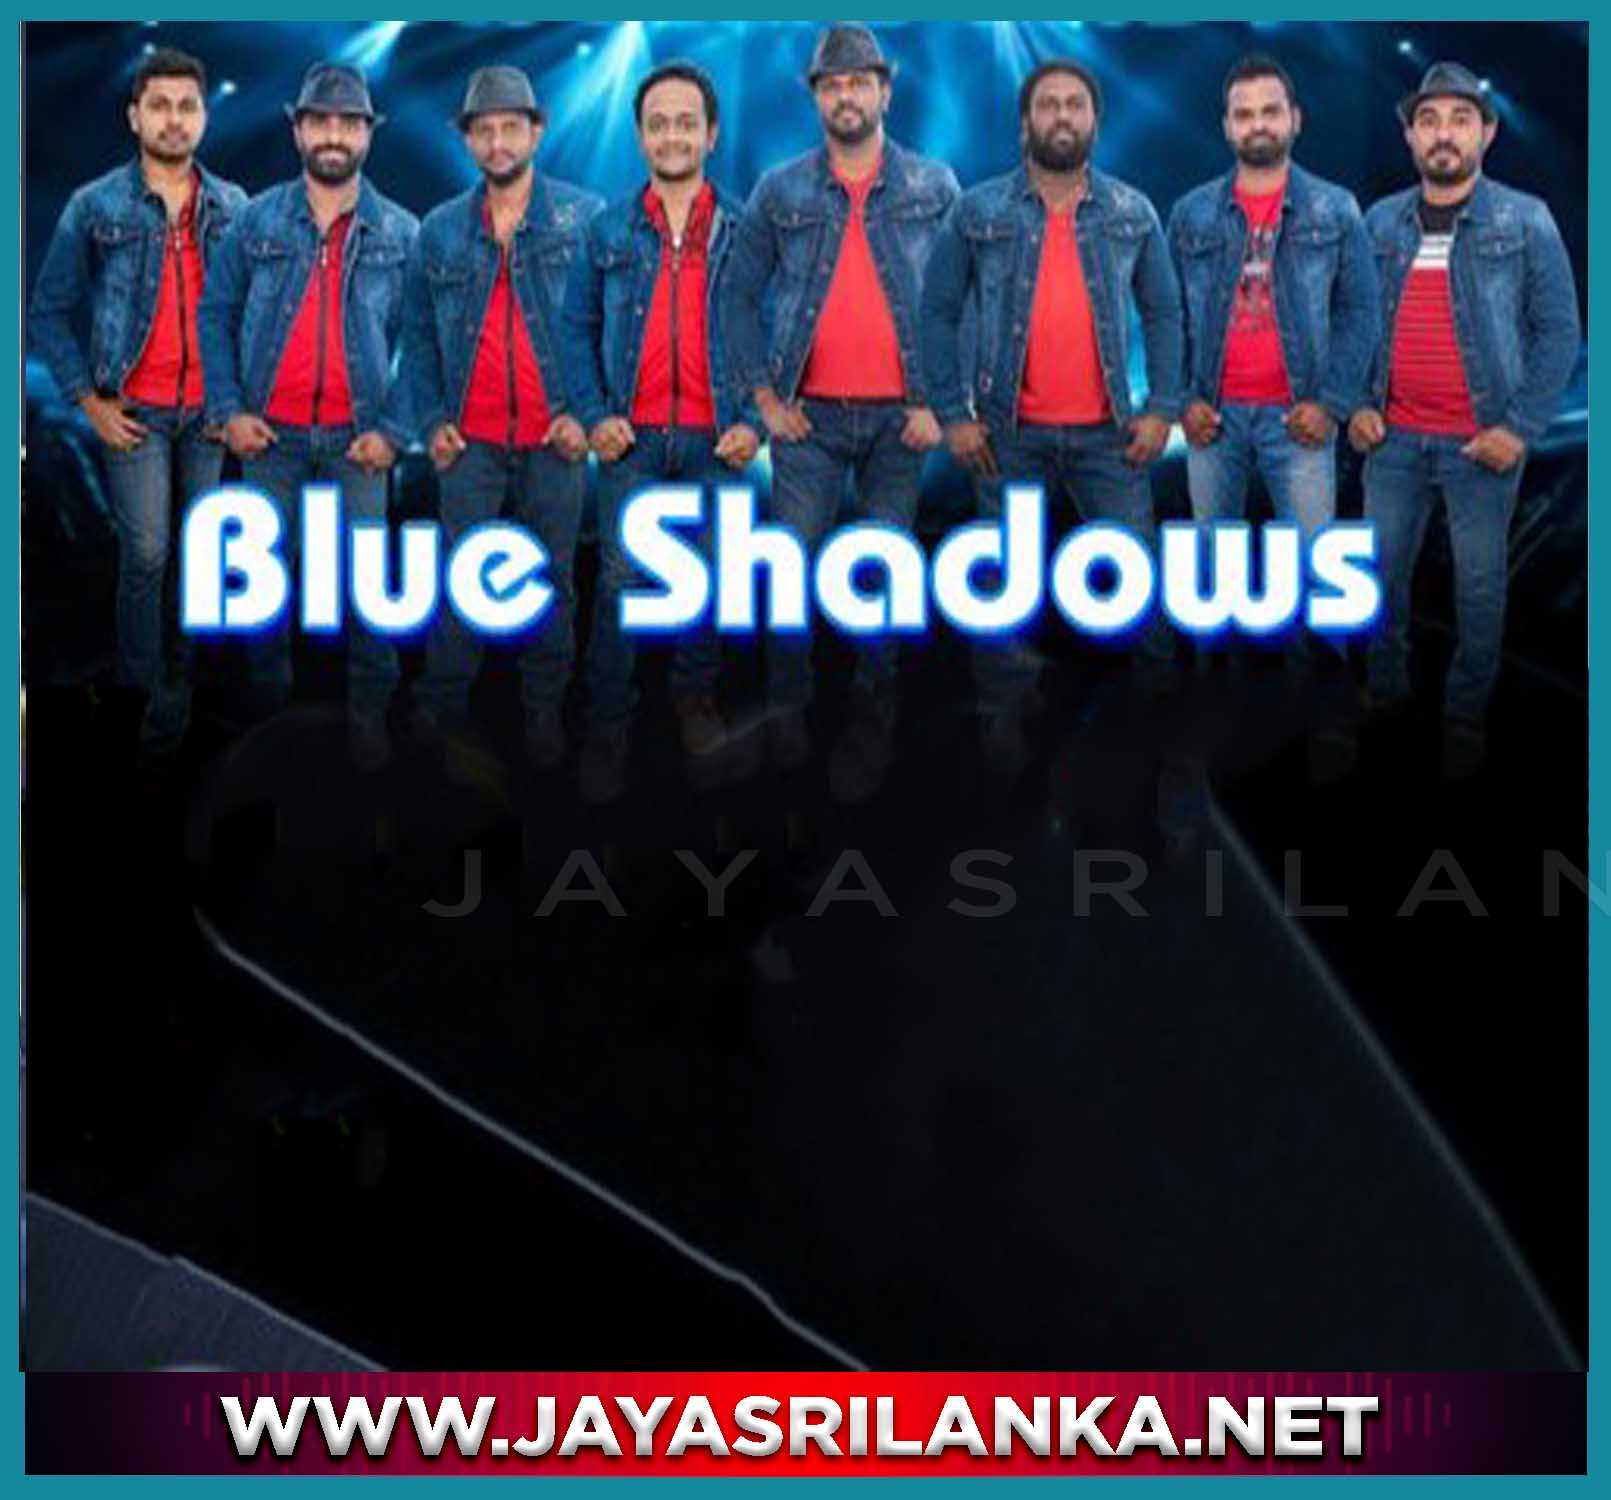 Paya Sumudu Sanda Paya - Blue Shadows mp3 Image